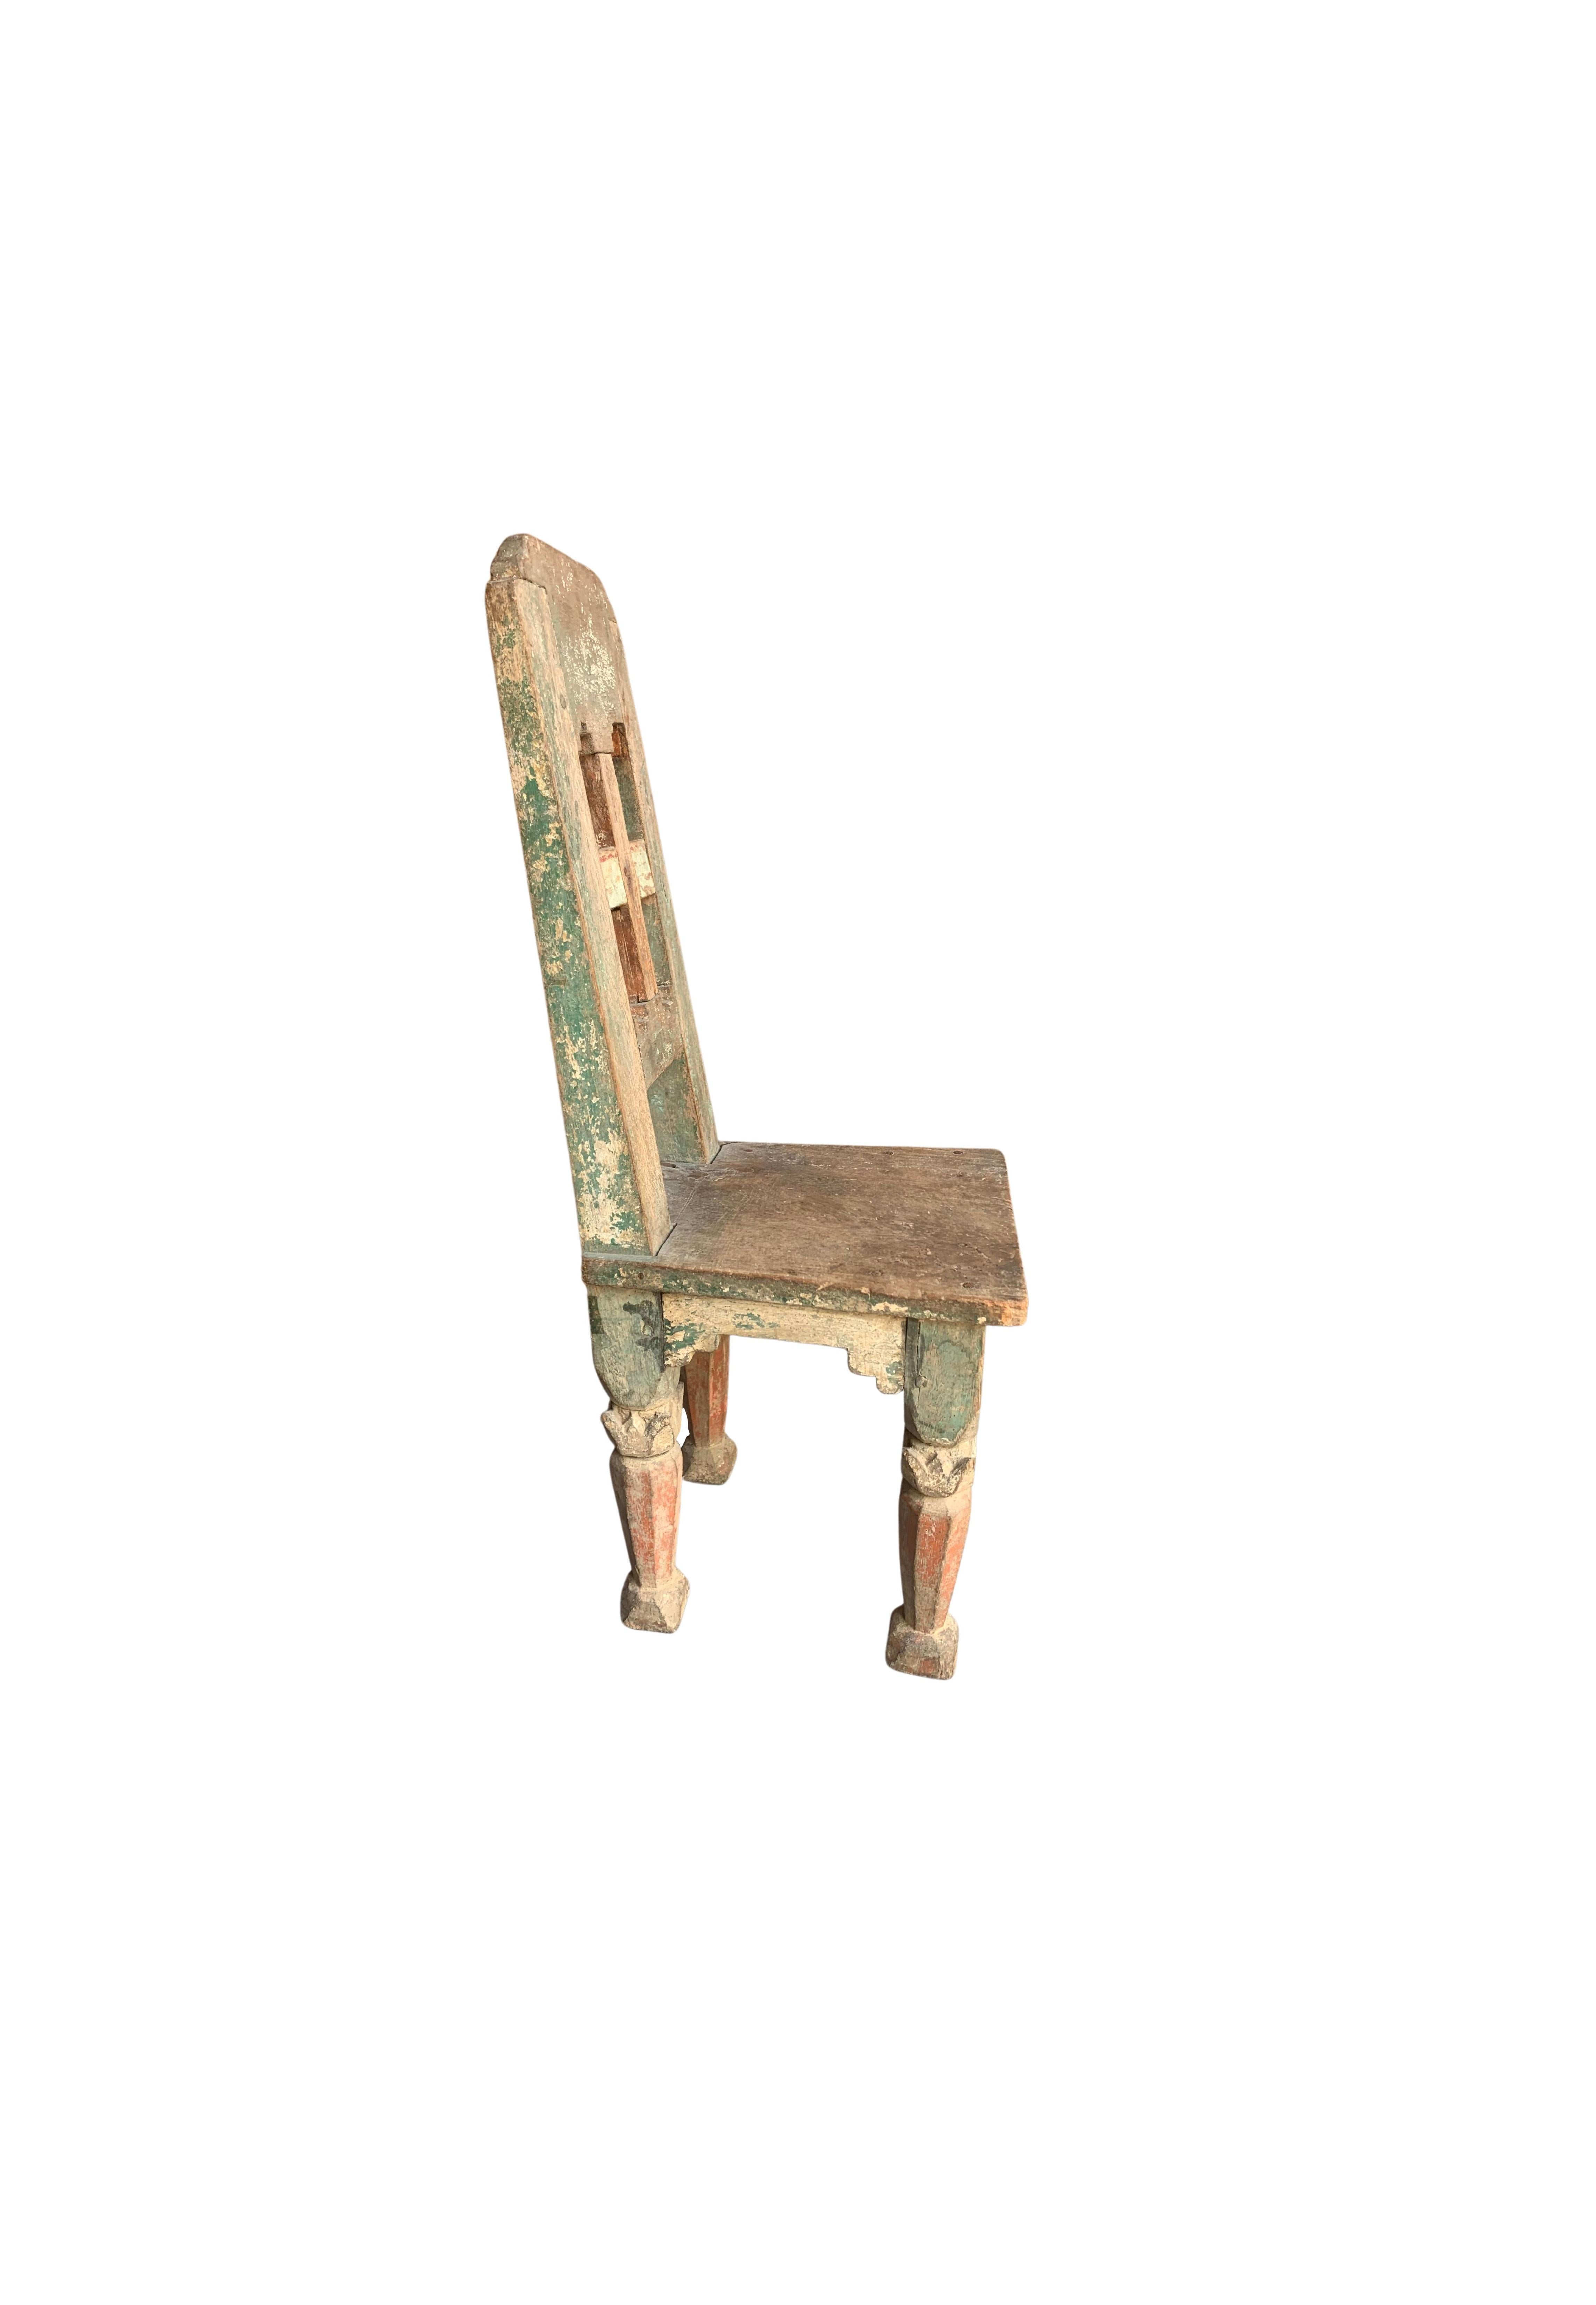 Mini-Stuhl aus Tabakplantagenholz, Java, Indonesien, um 1900 (Niederländisch Kolonial) im Angebot